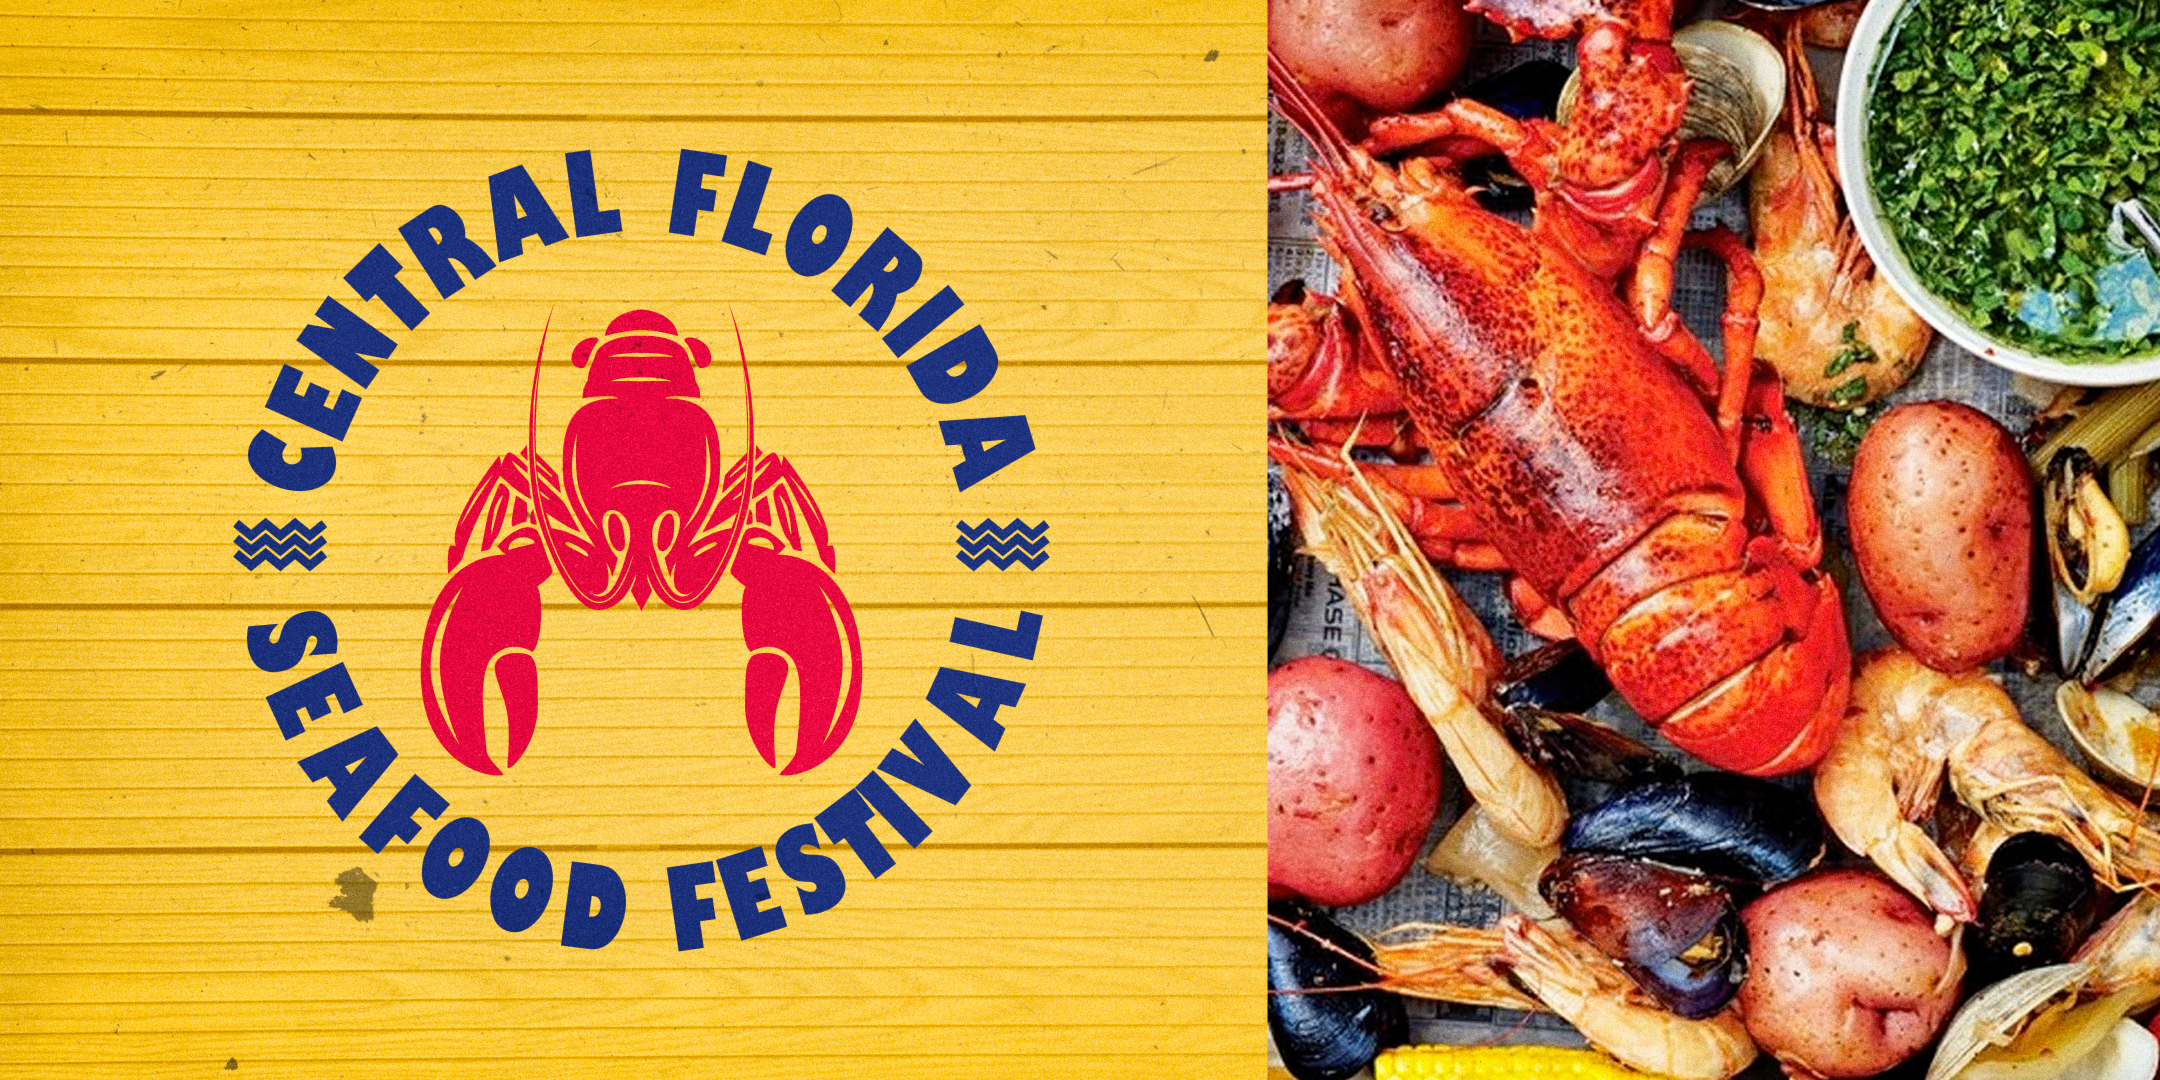  Central Florida Seafood Festival